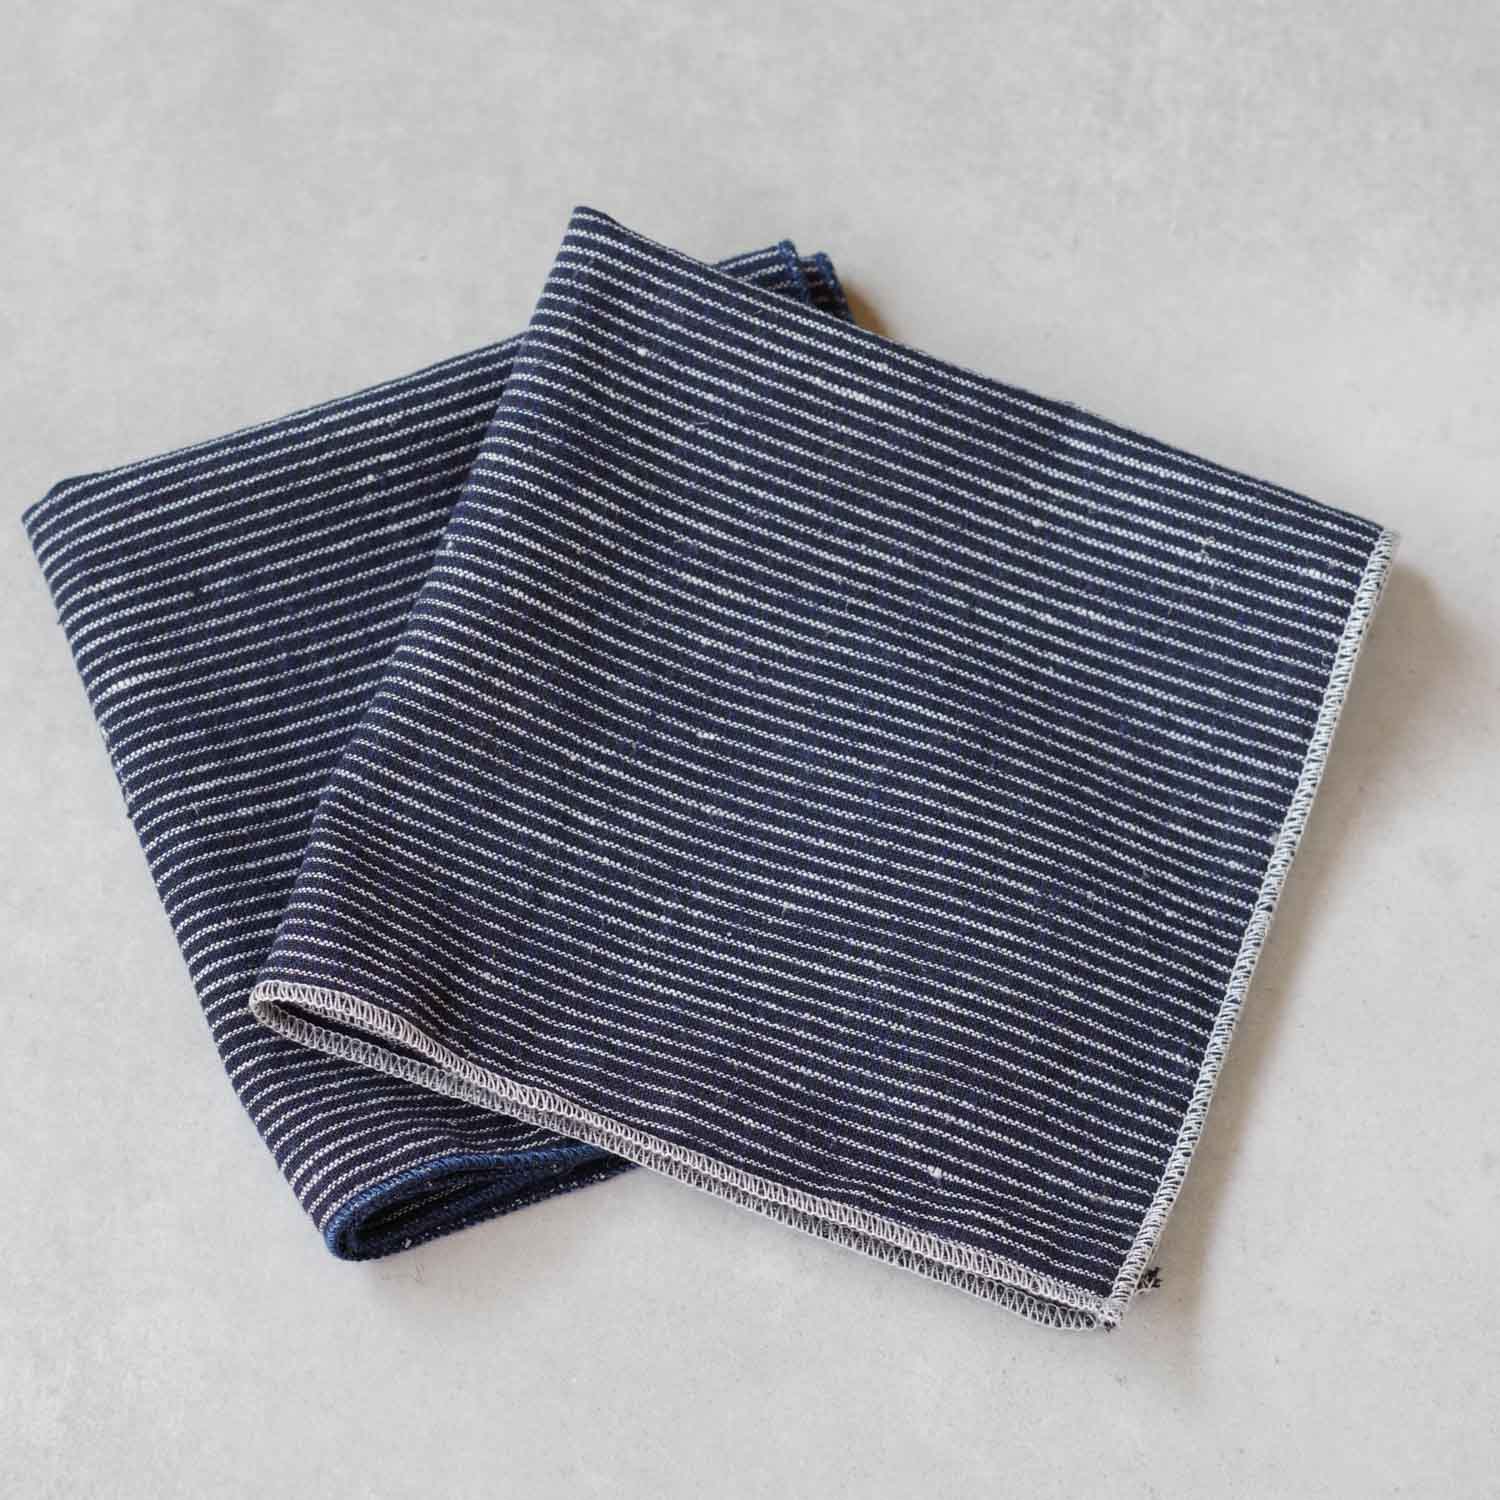 marcelle-small-napkins-navy-blue-pinstripe.jpg